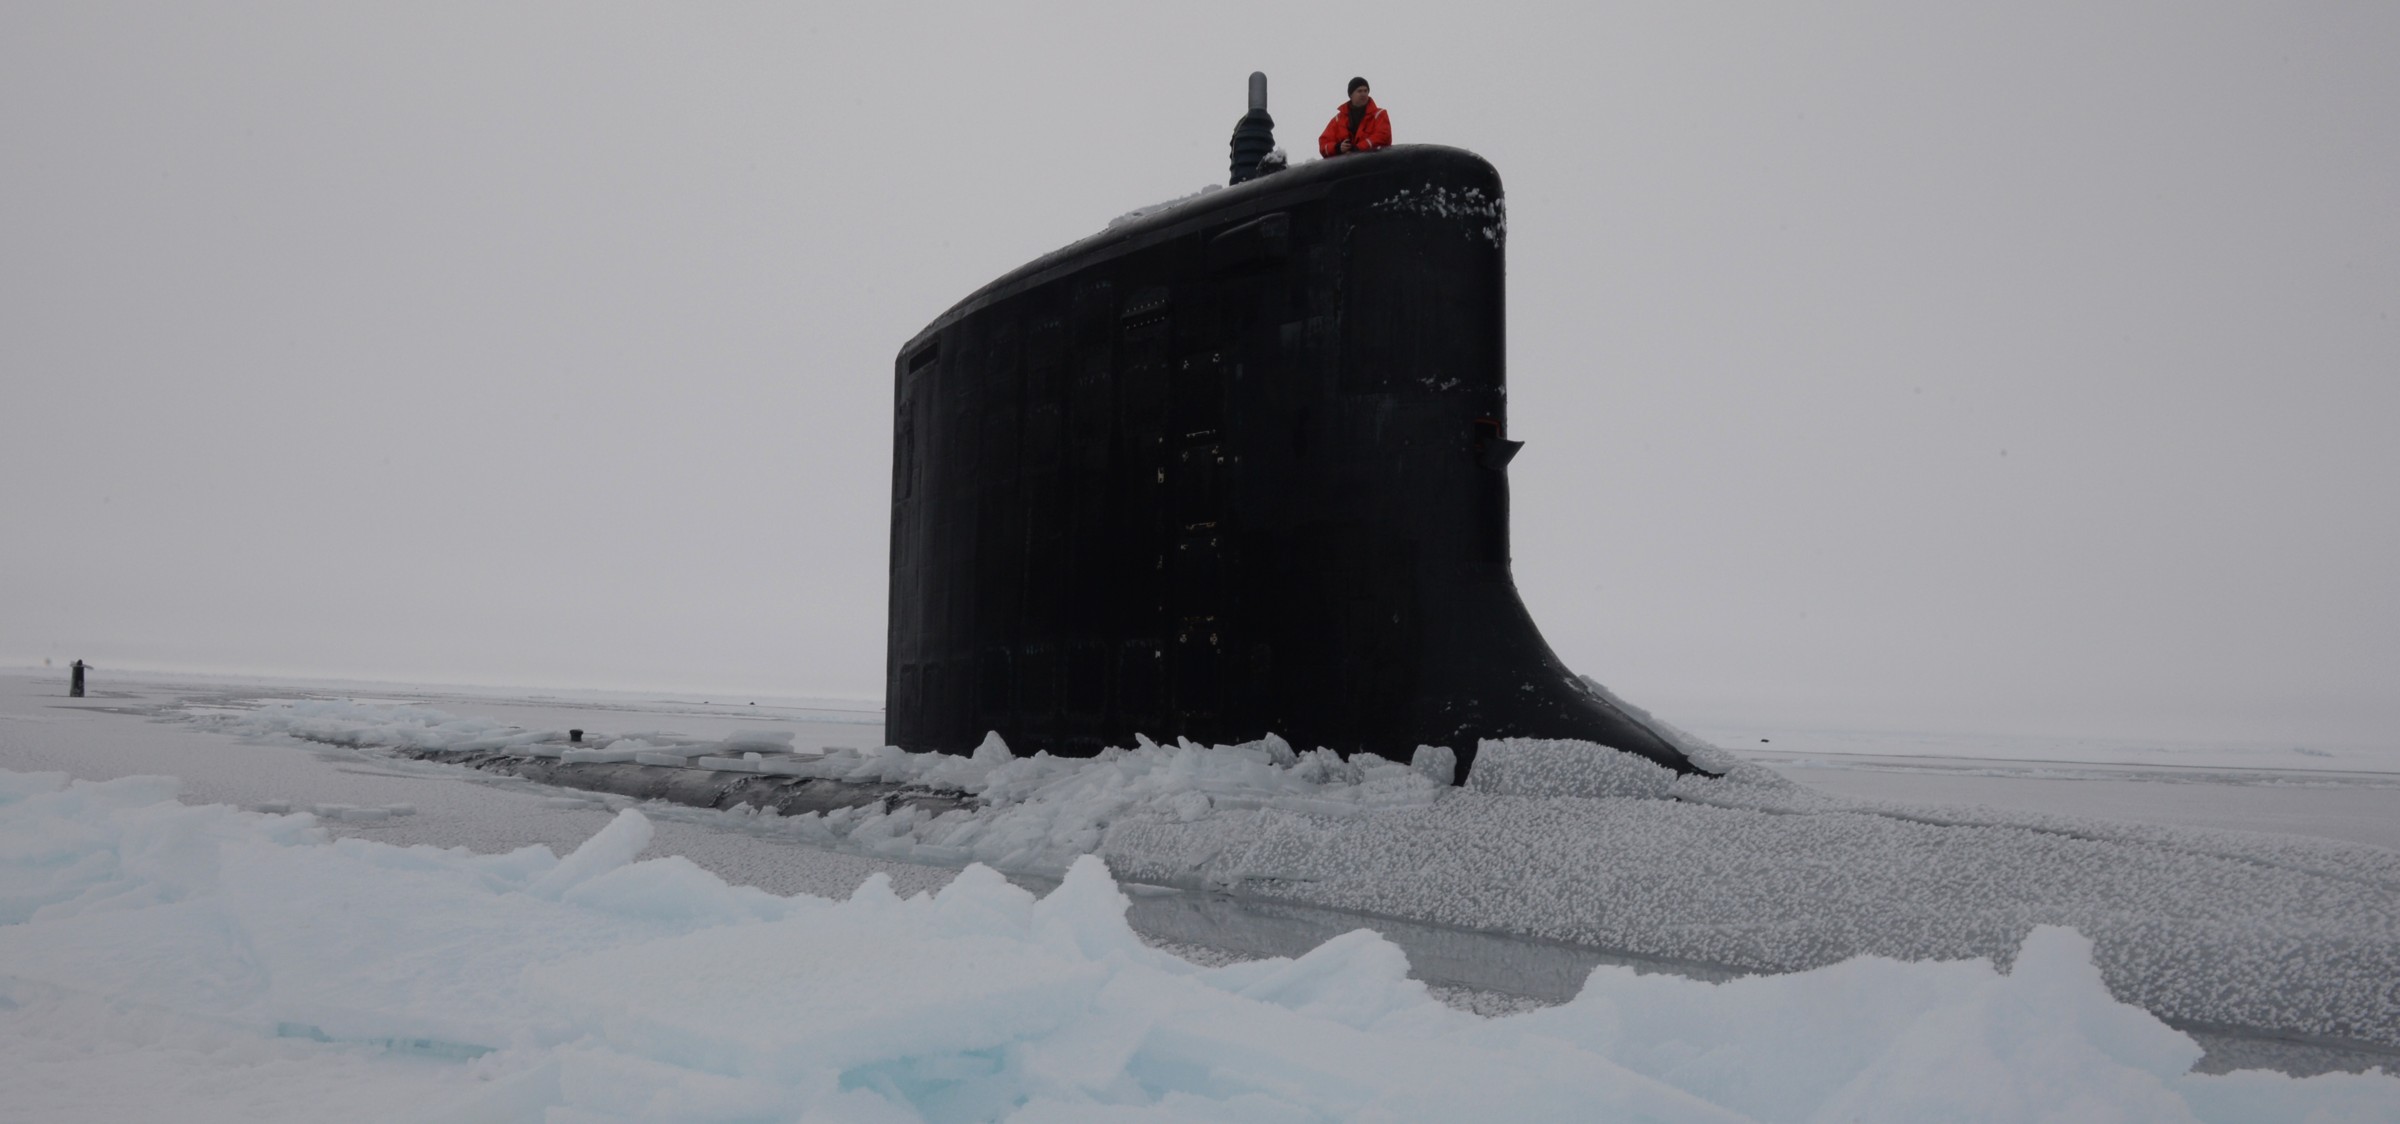 ssn-779 uss new mexico virginia class attack submarine us navy 04 ice exercise arctic ocean